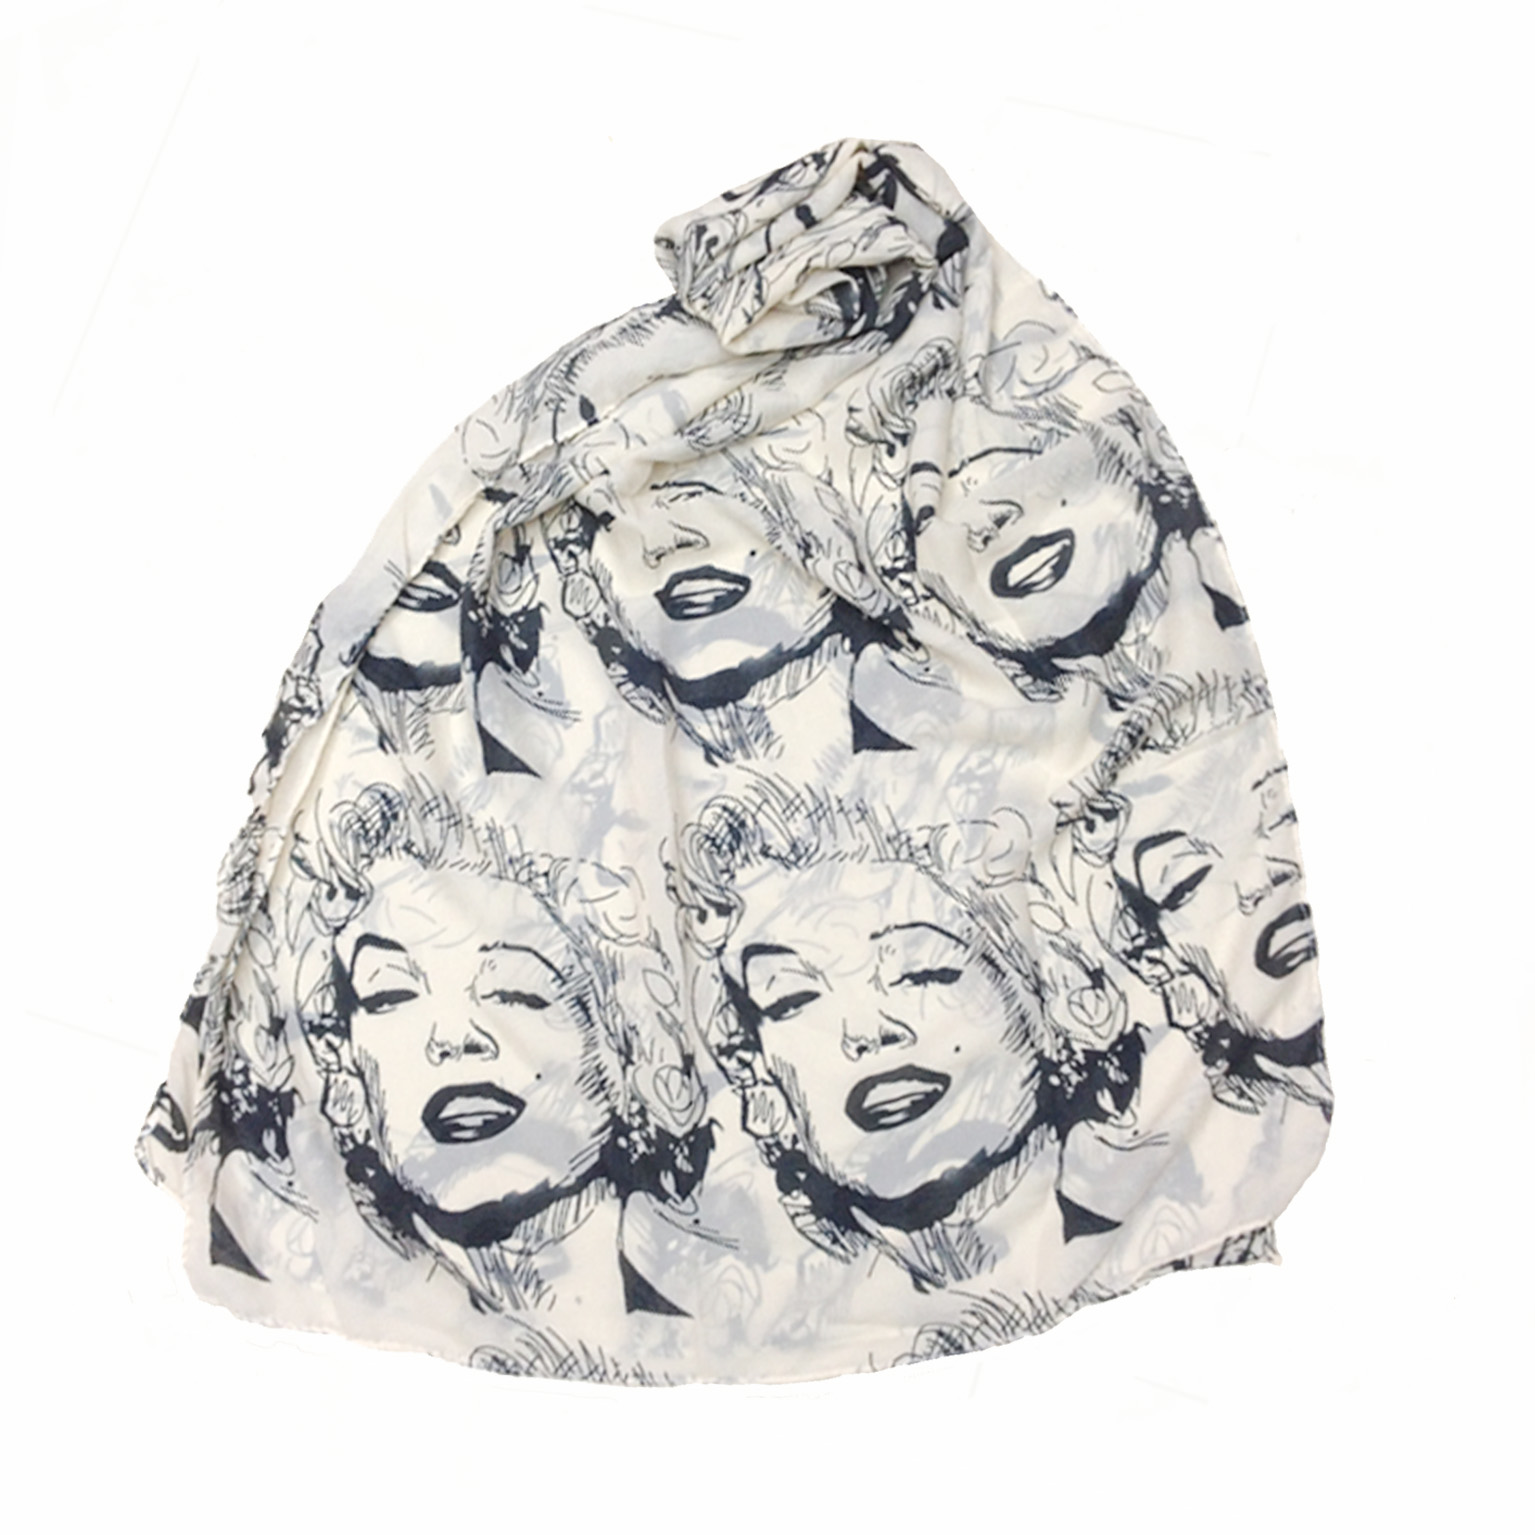 Famous people Marilyn Monroe printing chiffon scarf